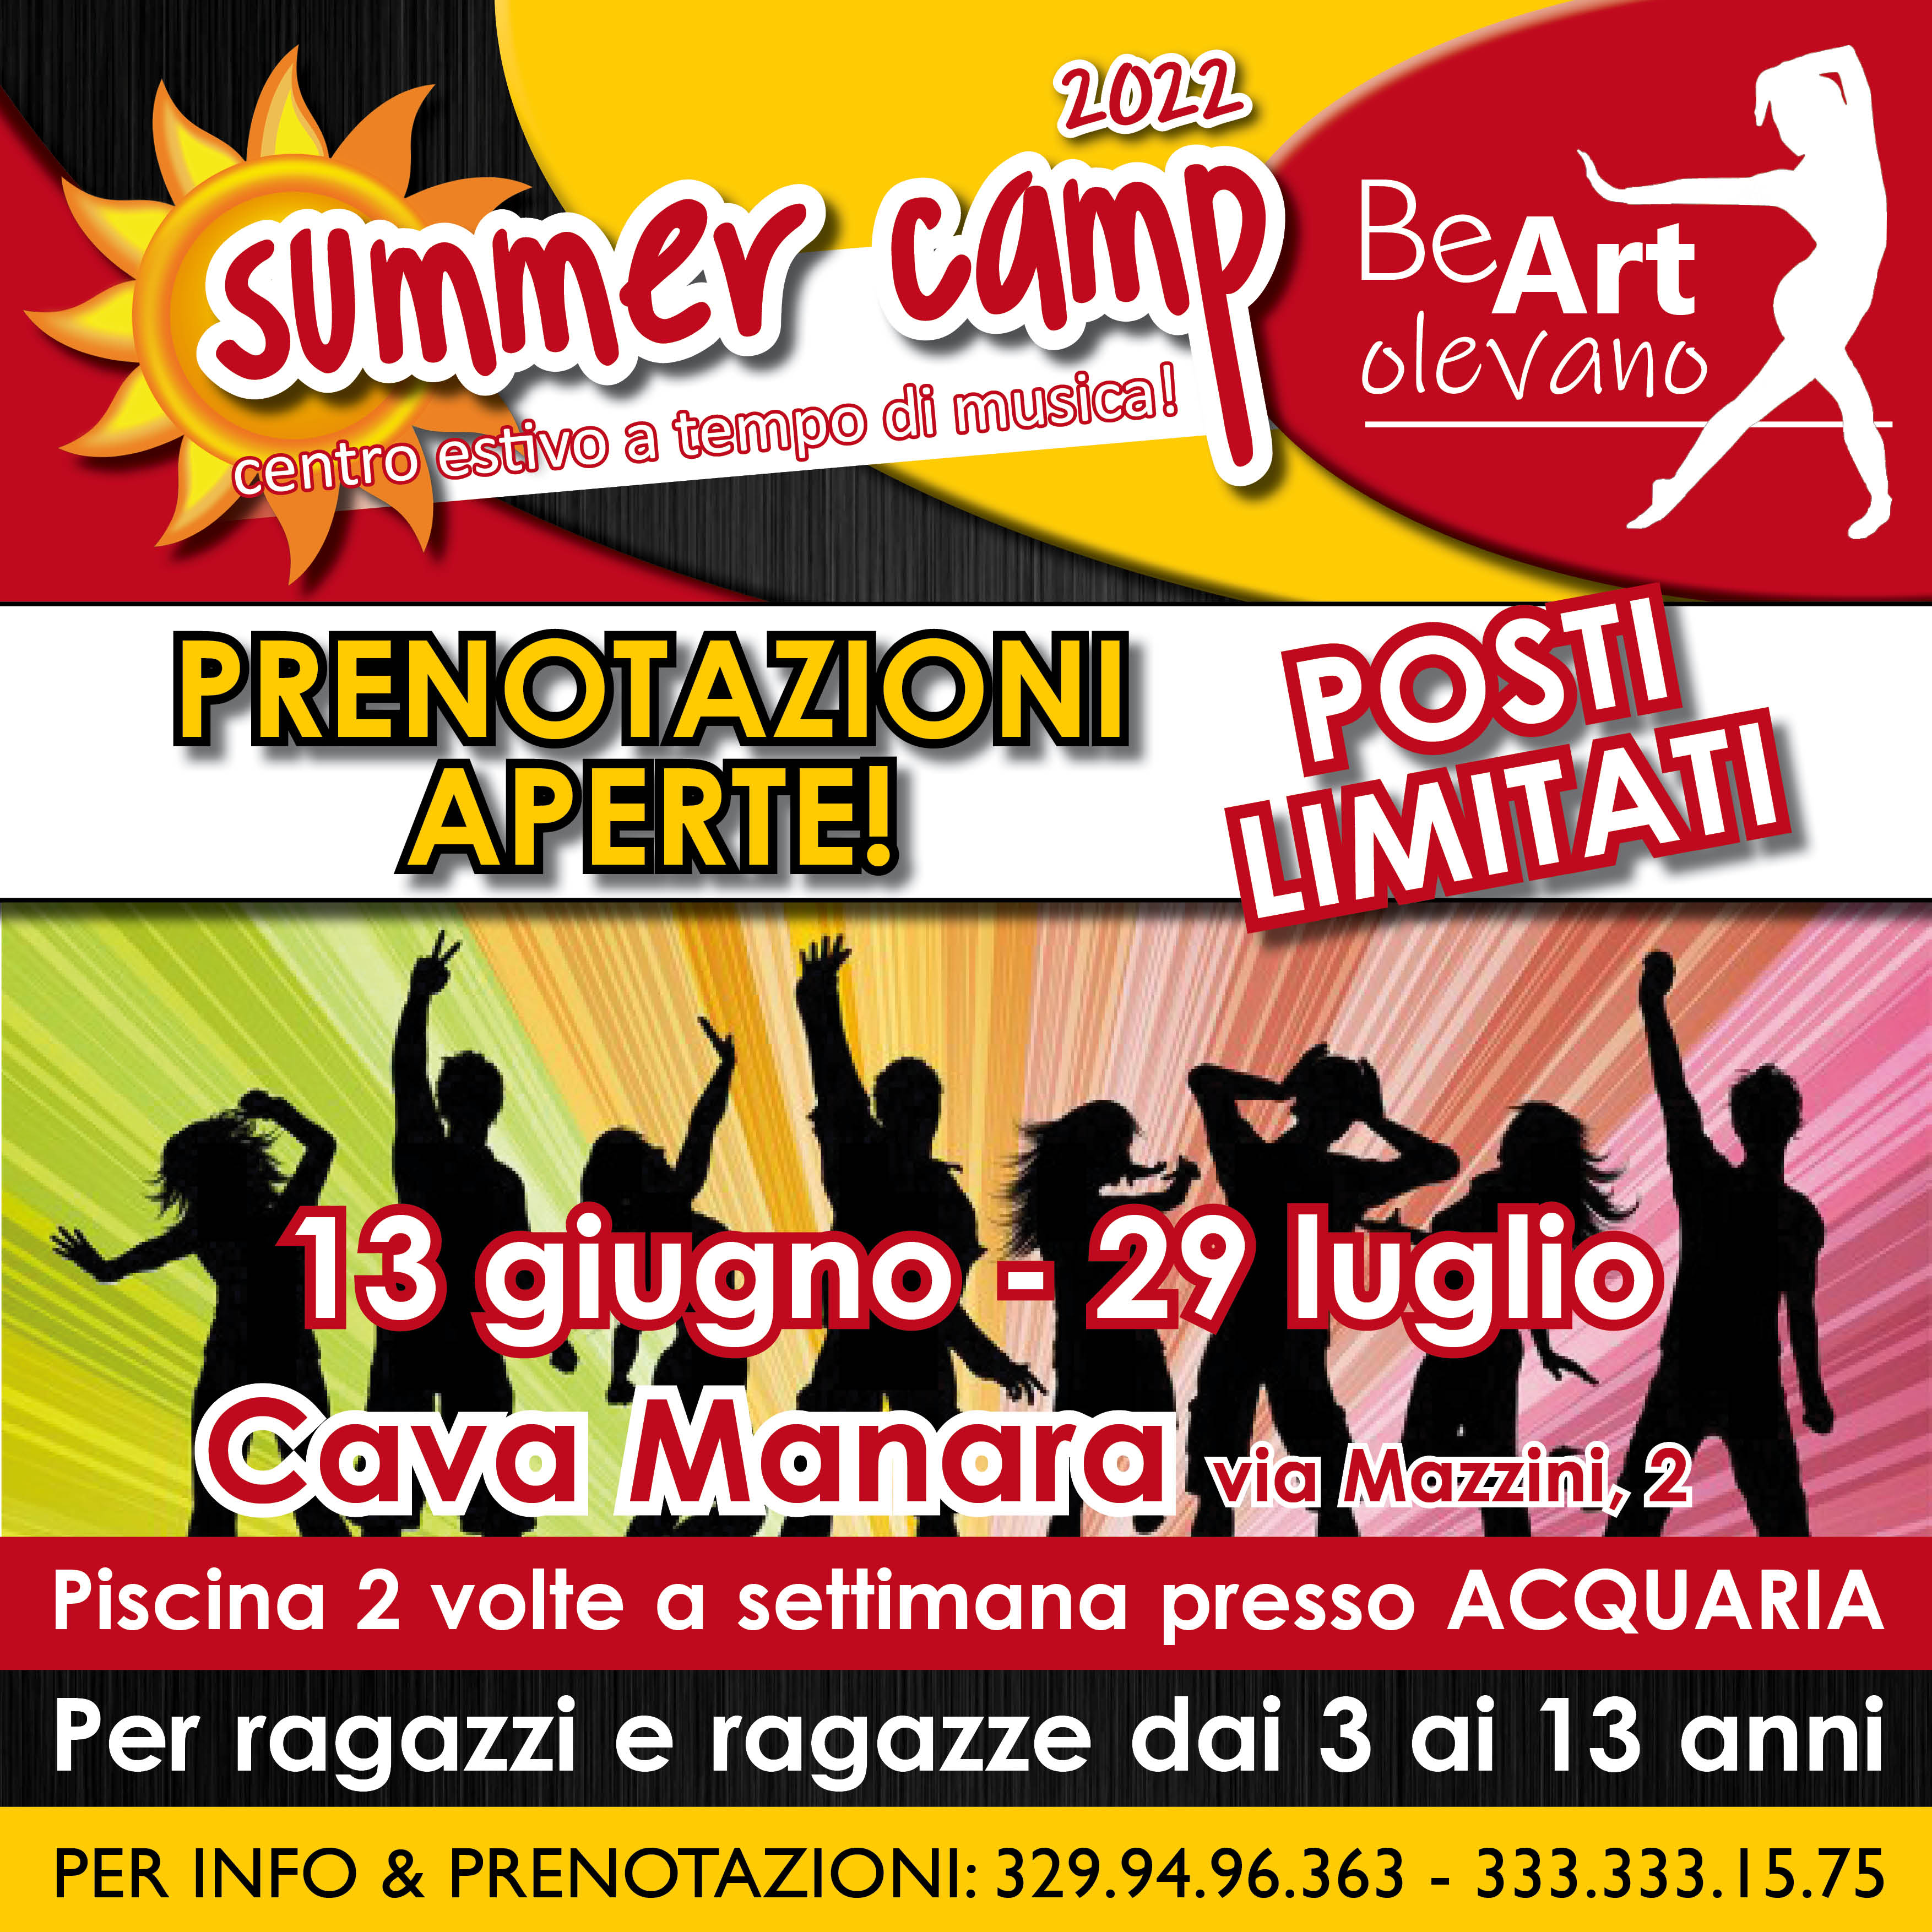 Summer Camp - Centro estivo - Cava Manara